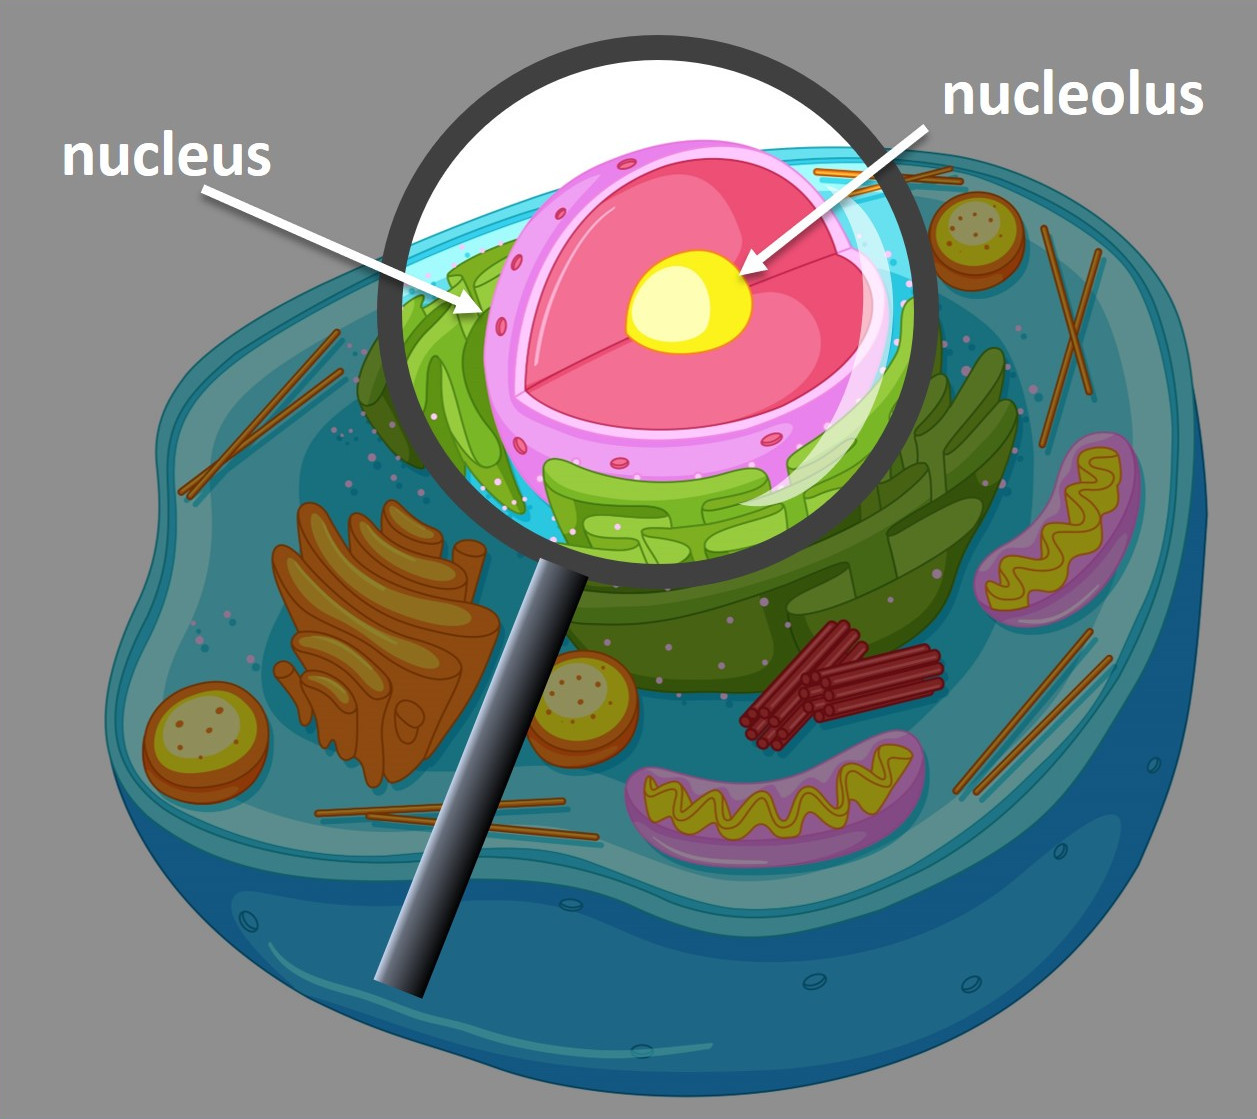 close up image of nucleus